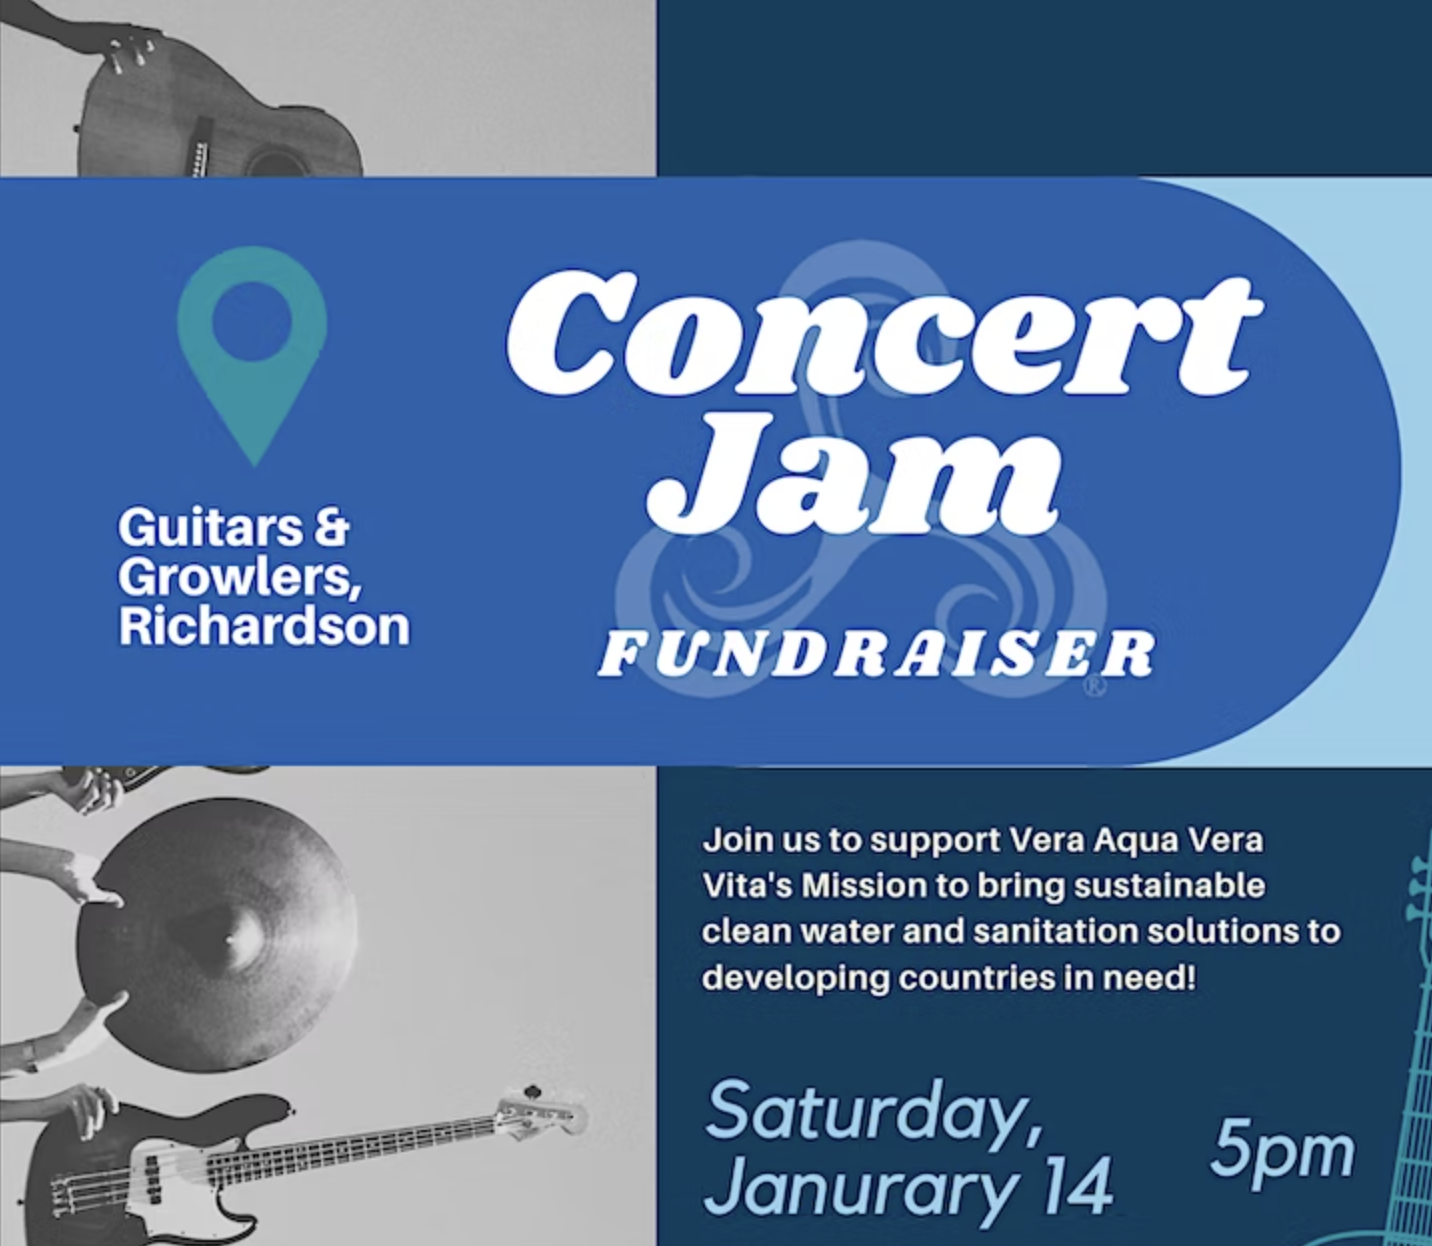 holiday fundraising, a concert jam fundraiser is raising money for Vera Aqua Vera Vita